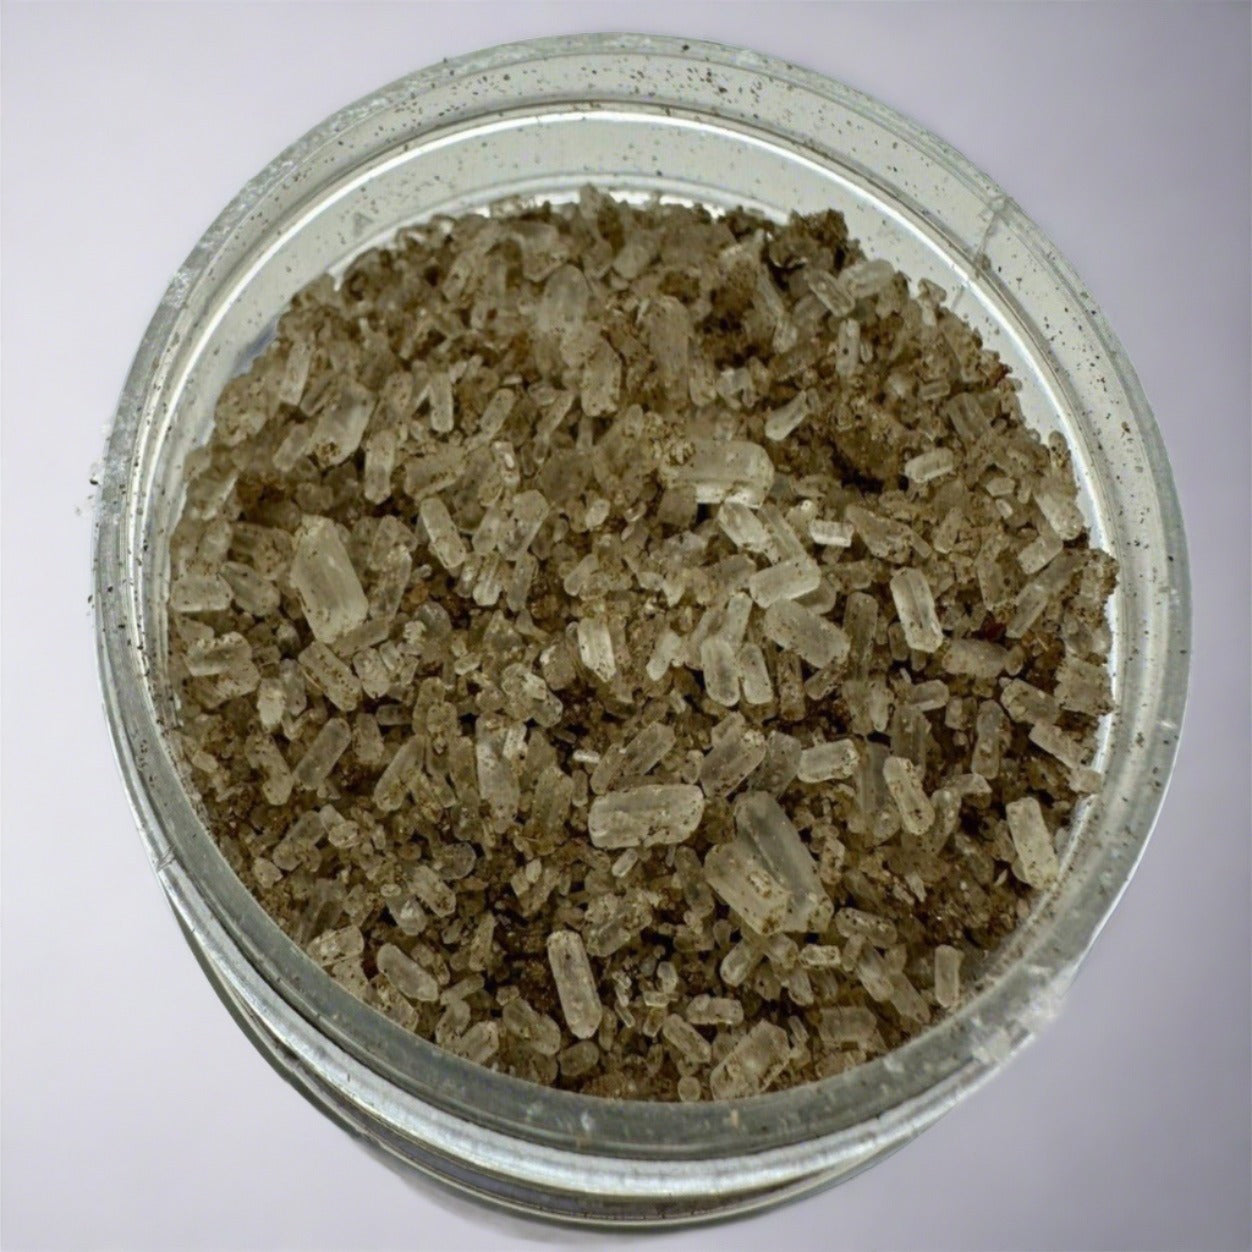 Greenish brown colored bath salts in an opened jar